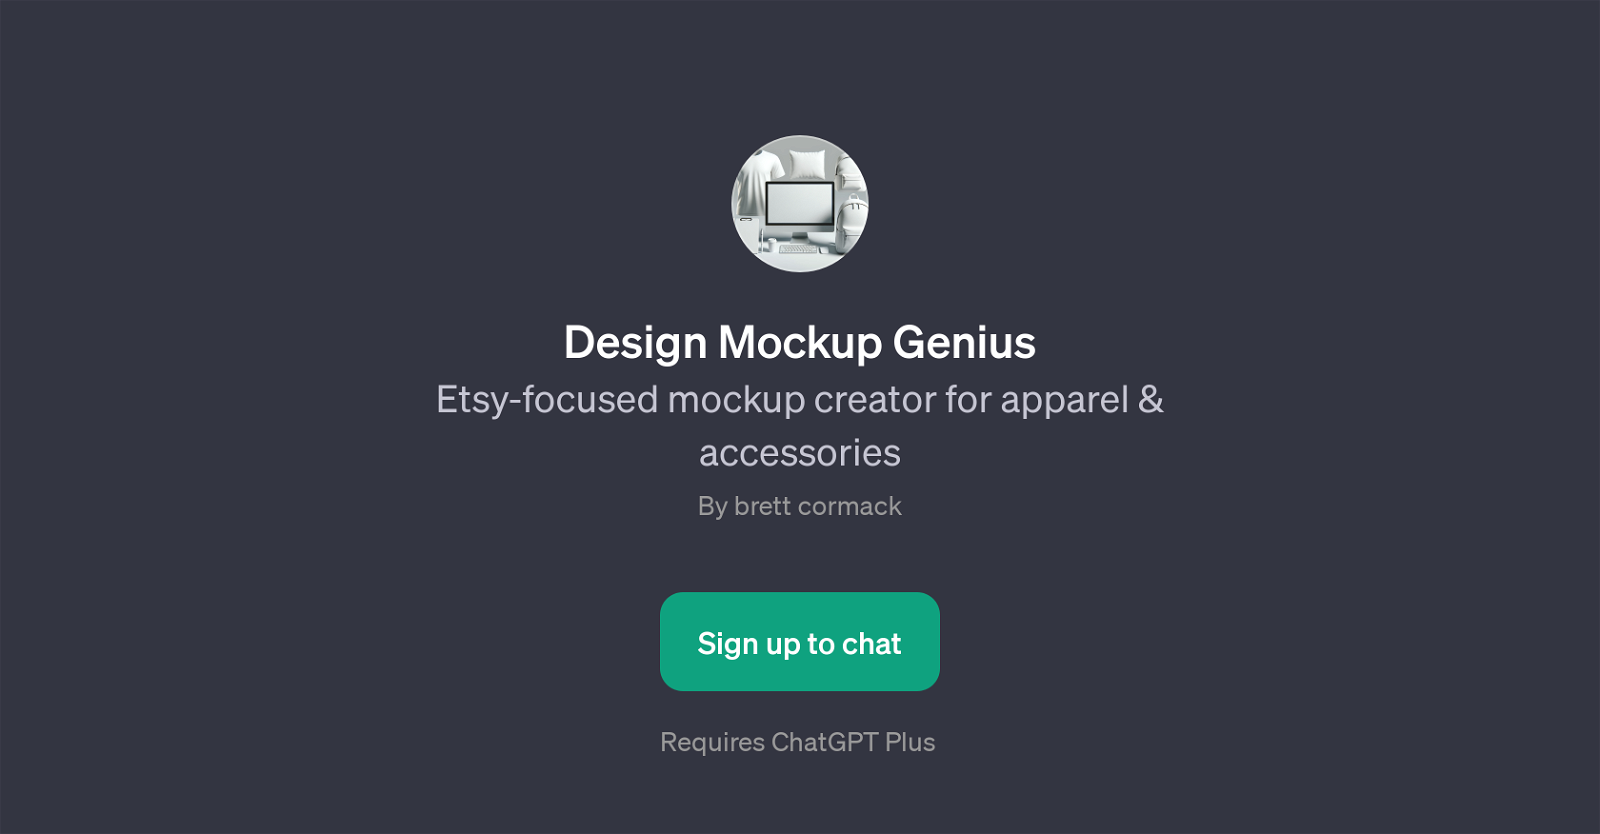 Design Mockup Genius website